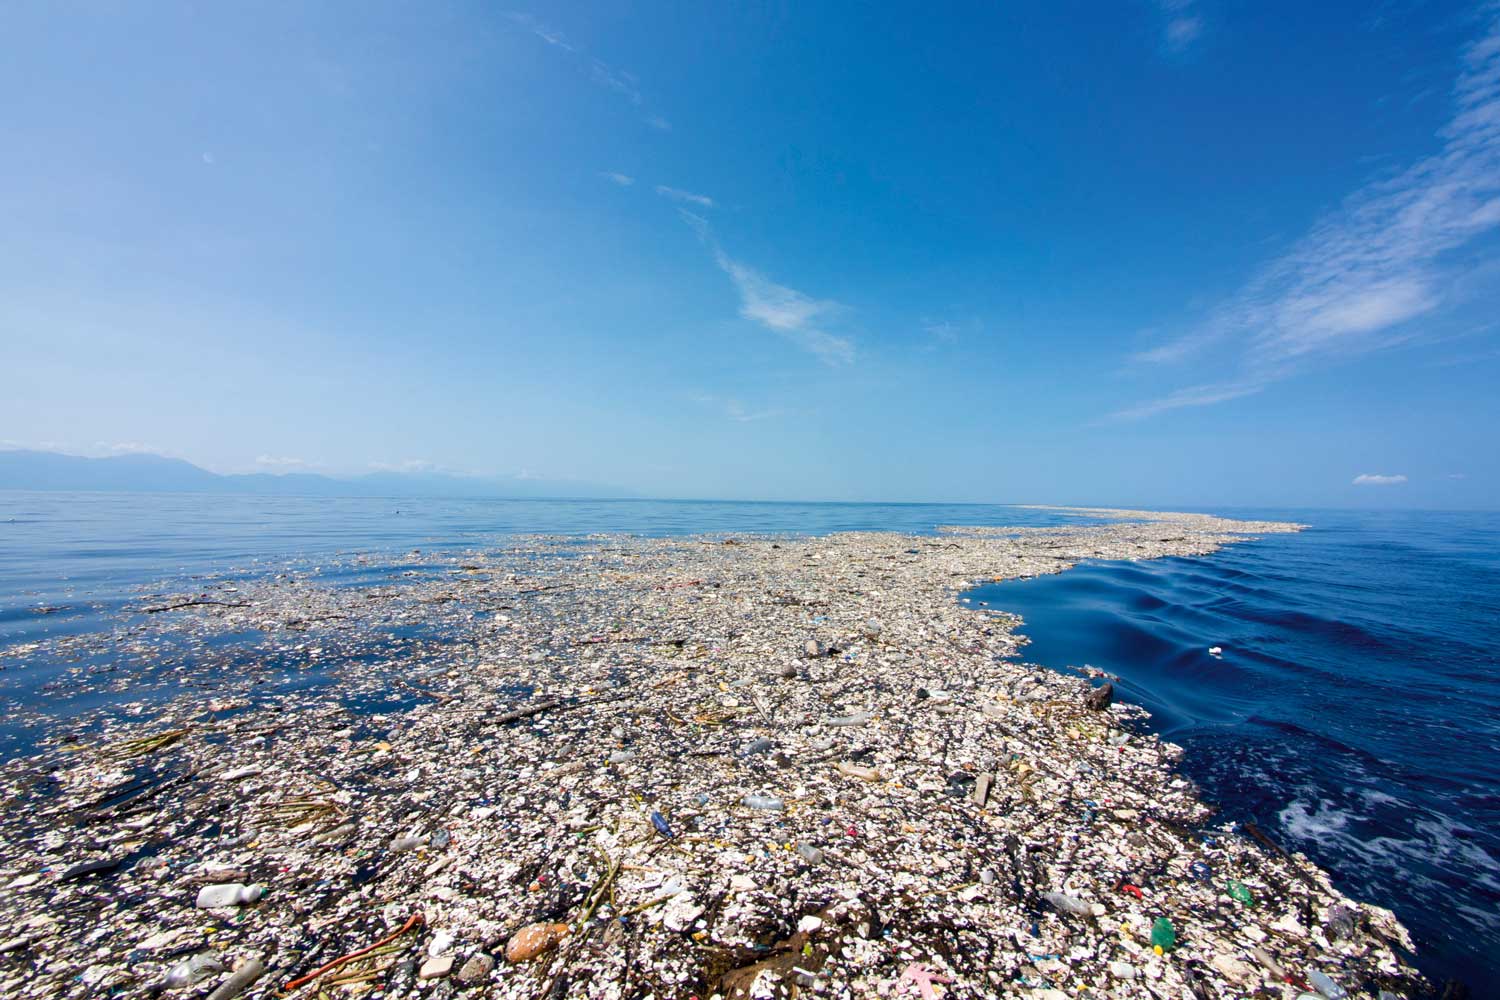 Trash on the ocean surface (Image: Caroline Power)